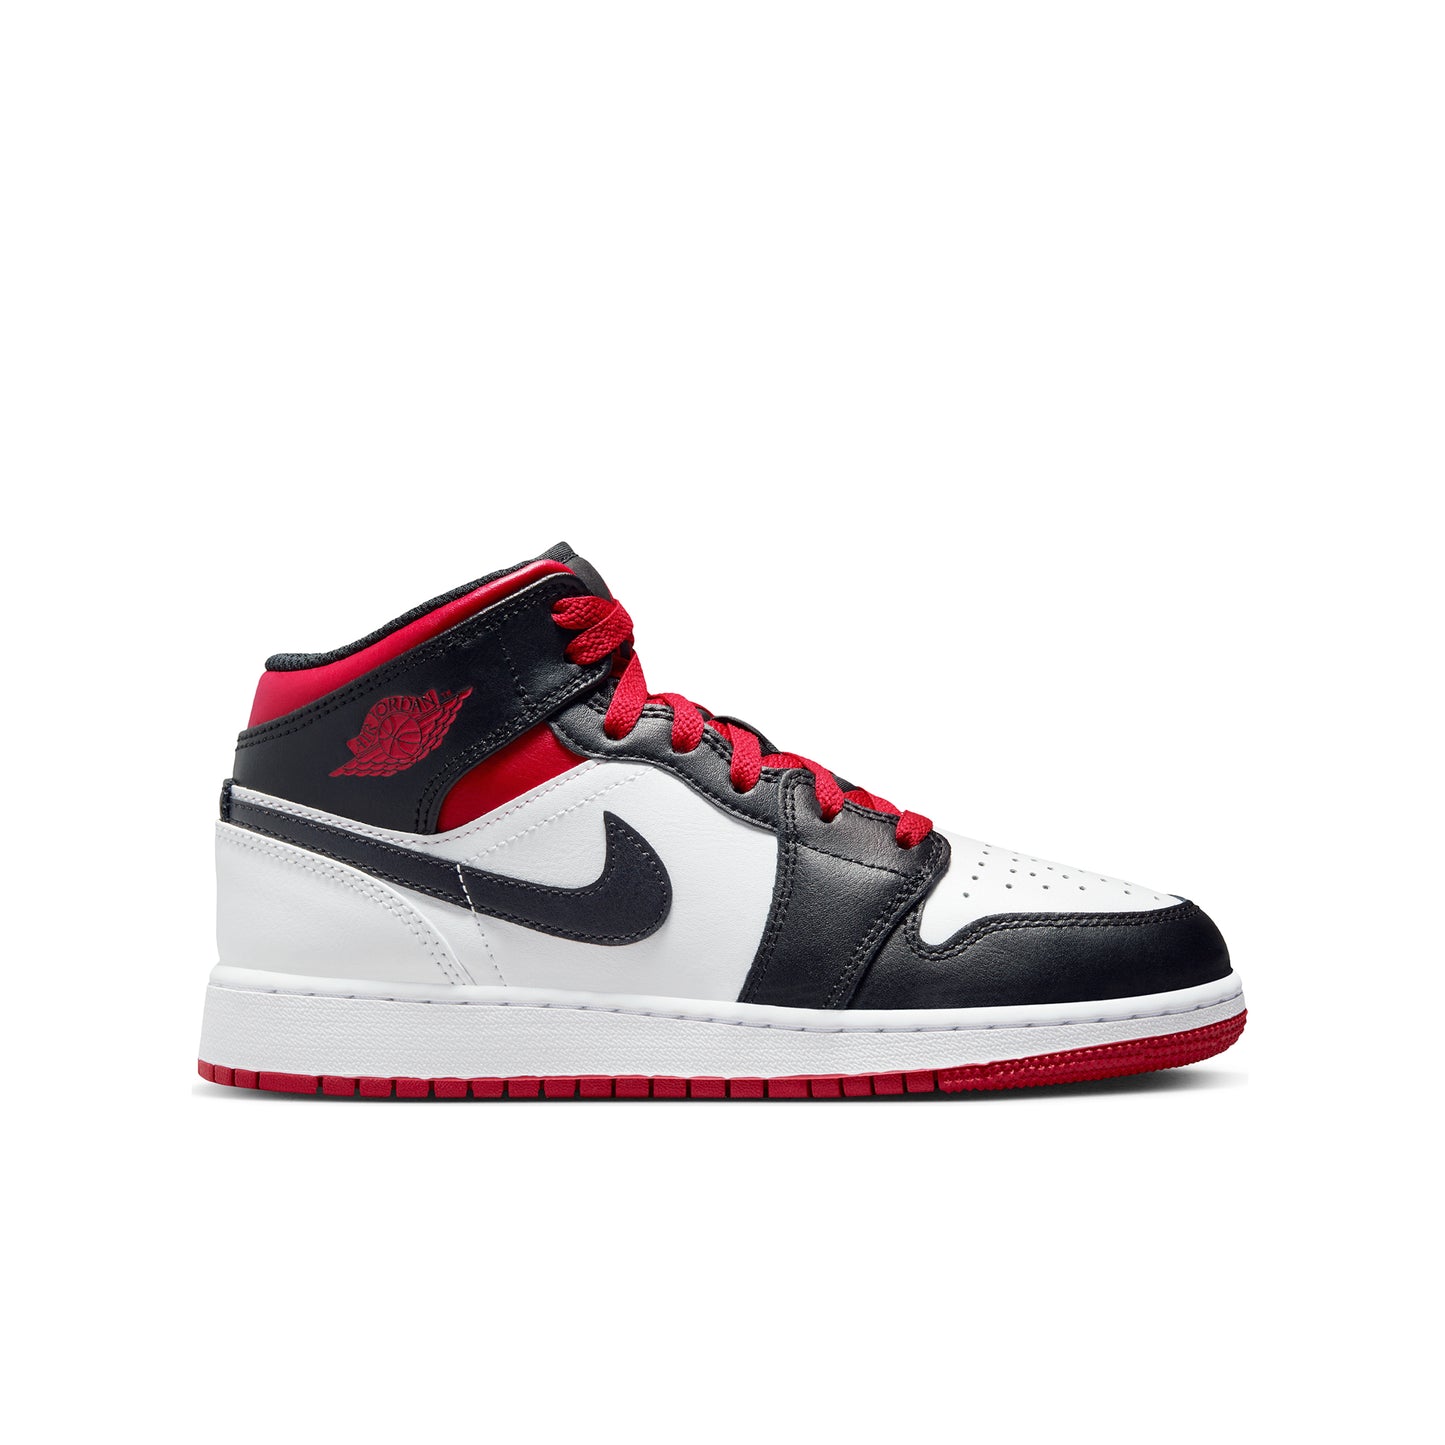 Nike Air Jordan 1 Mid GS Gym Red Black Toe